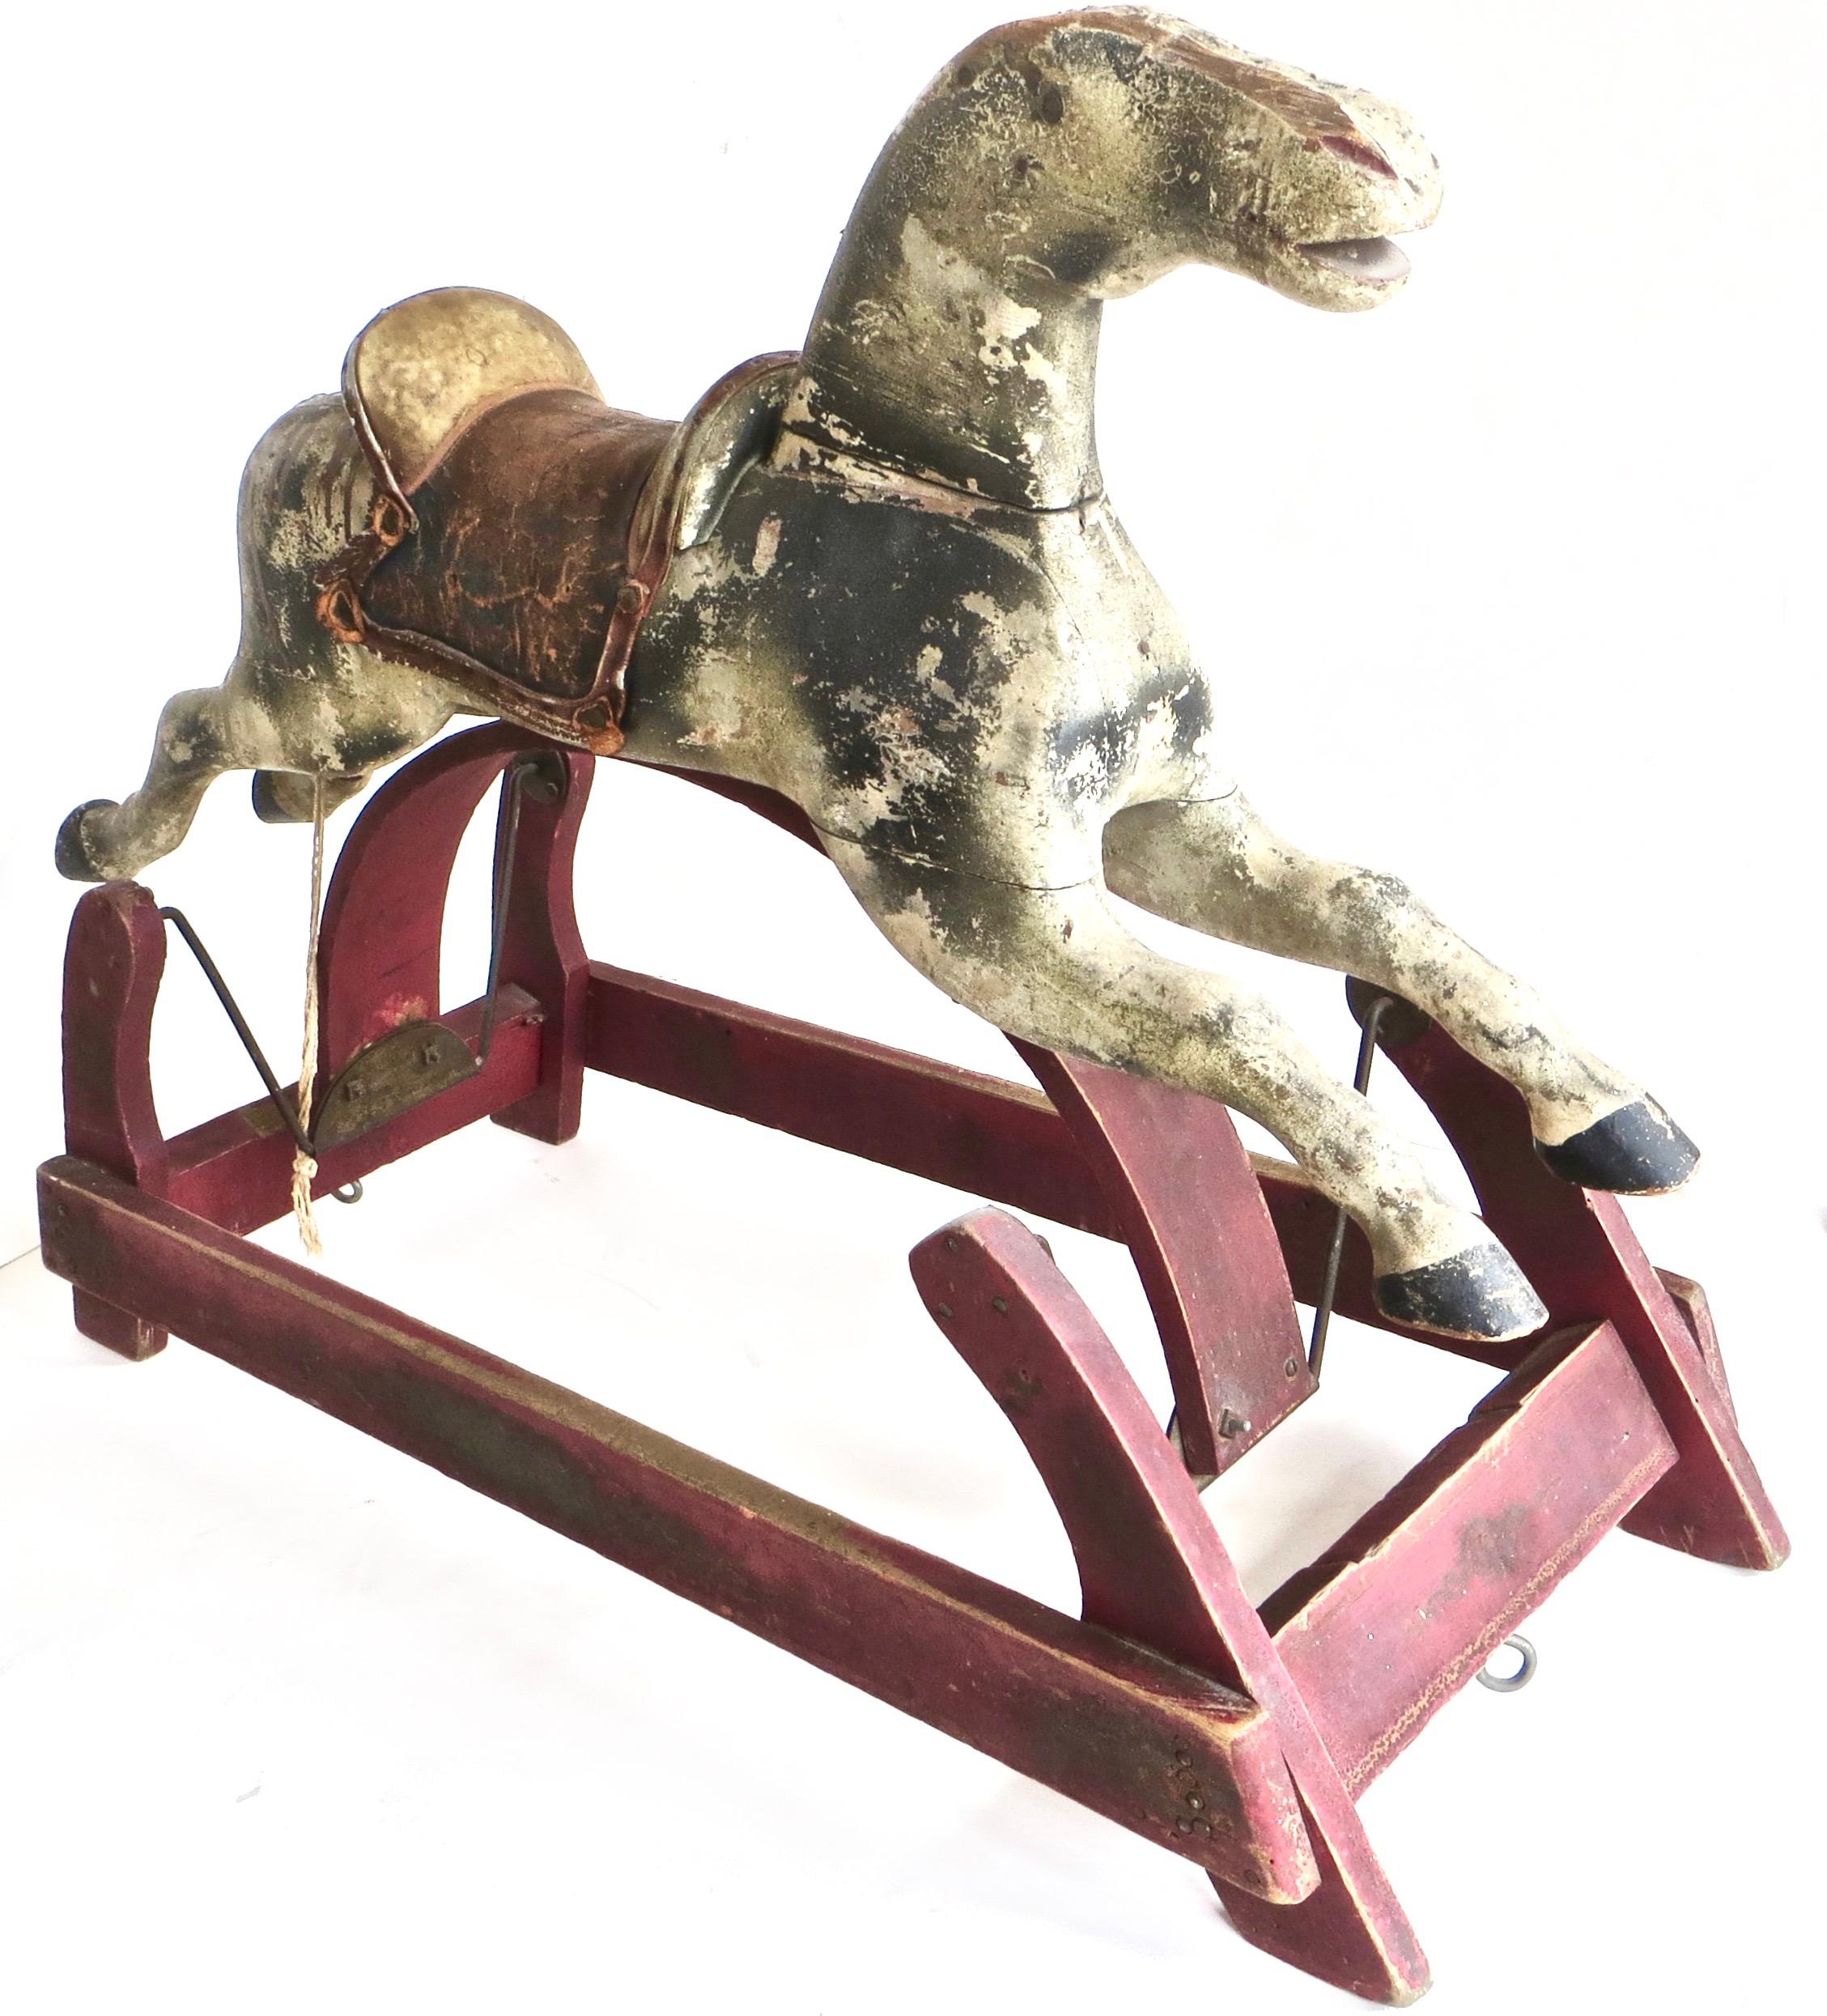 Of American manufacture, circa 1875, this authentic children's platform rocking horse 